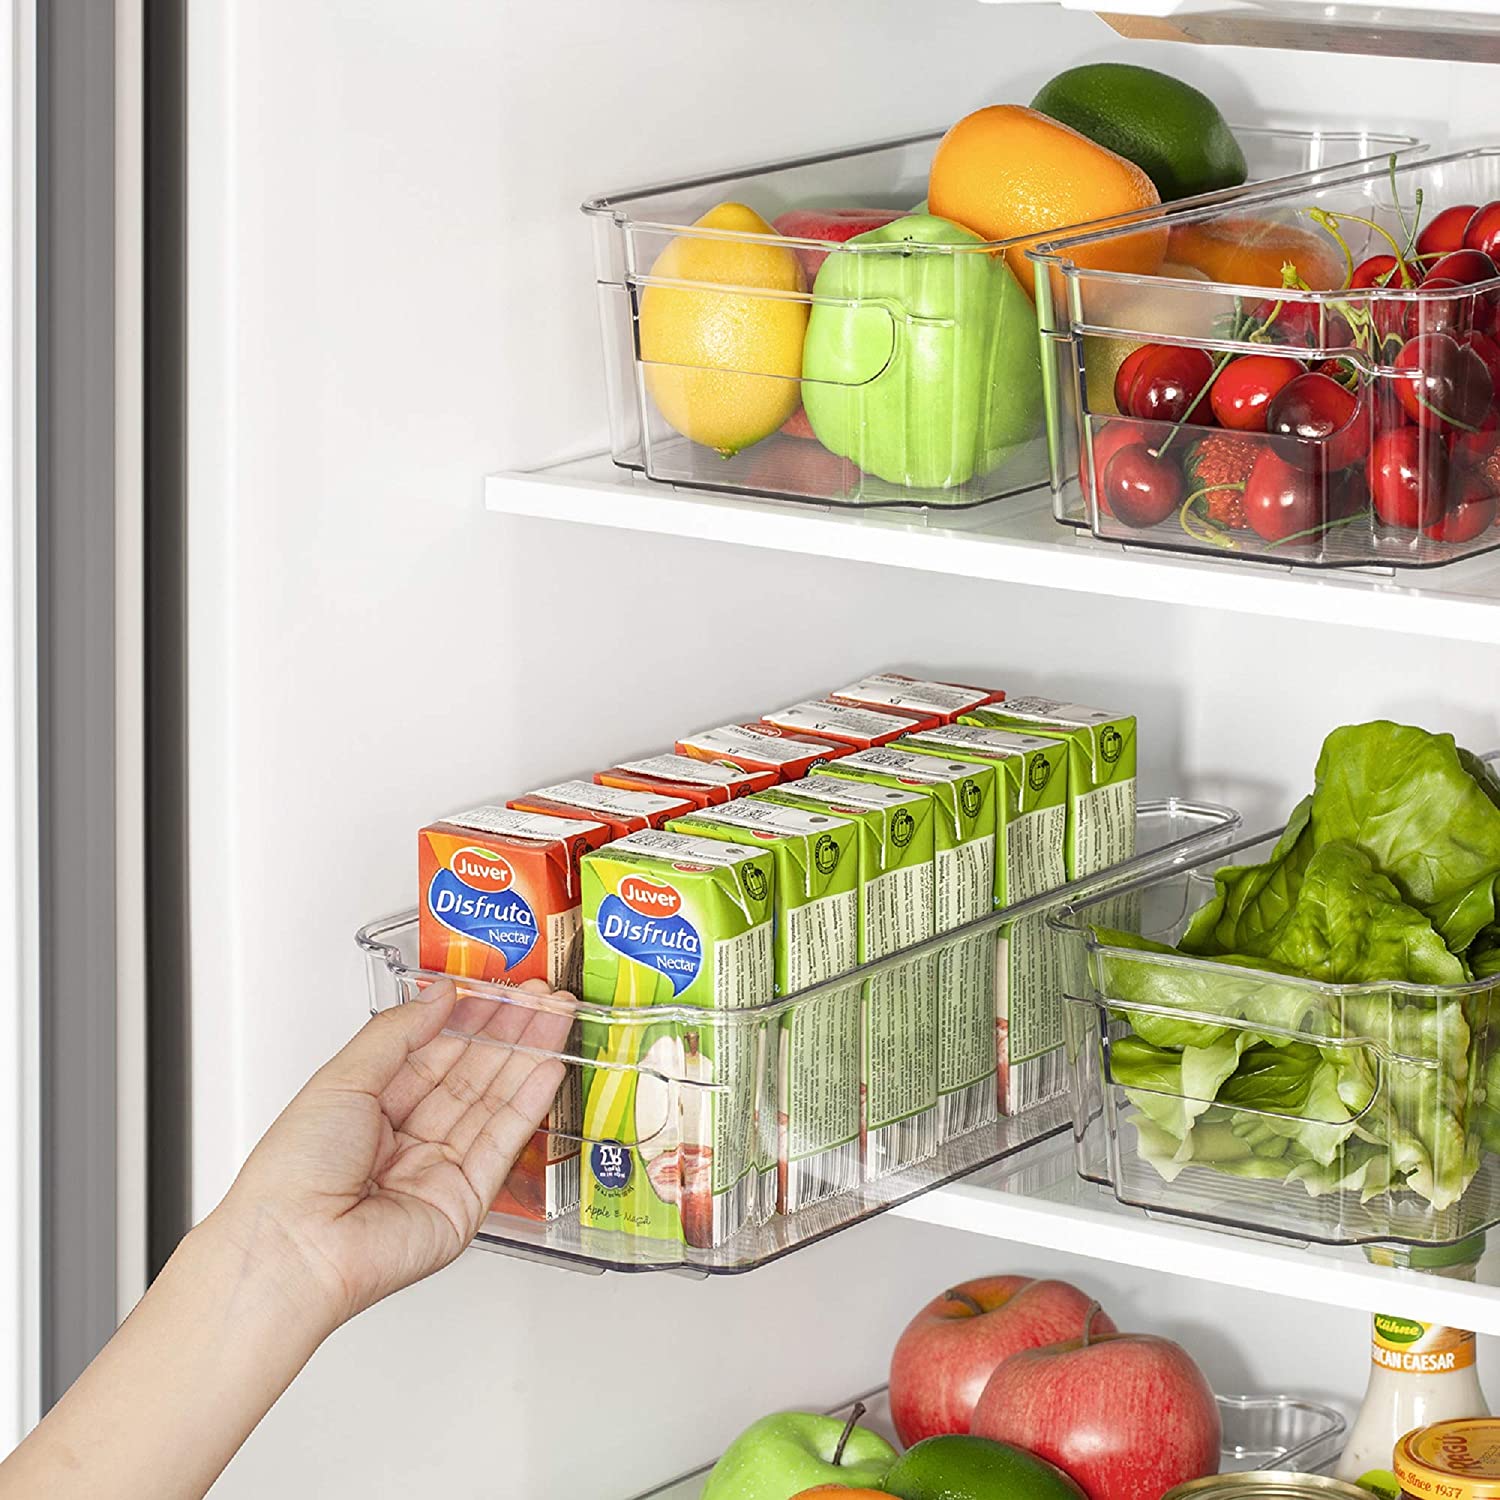 14 Best Refrigerator Organization And Storage For 2023